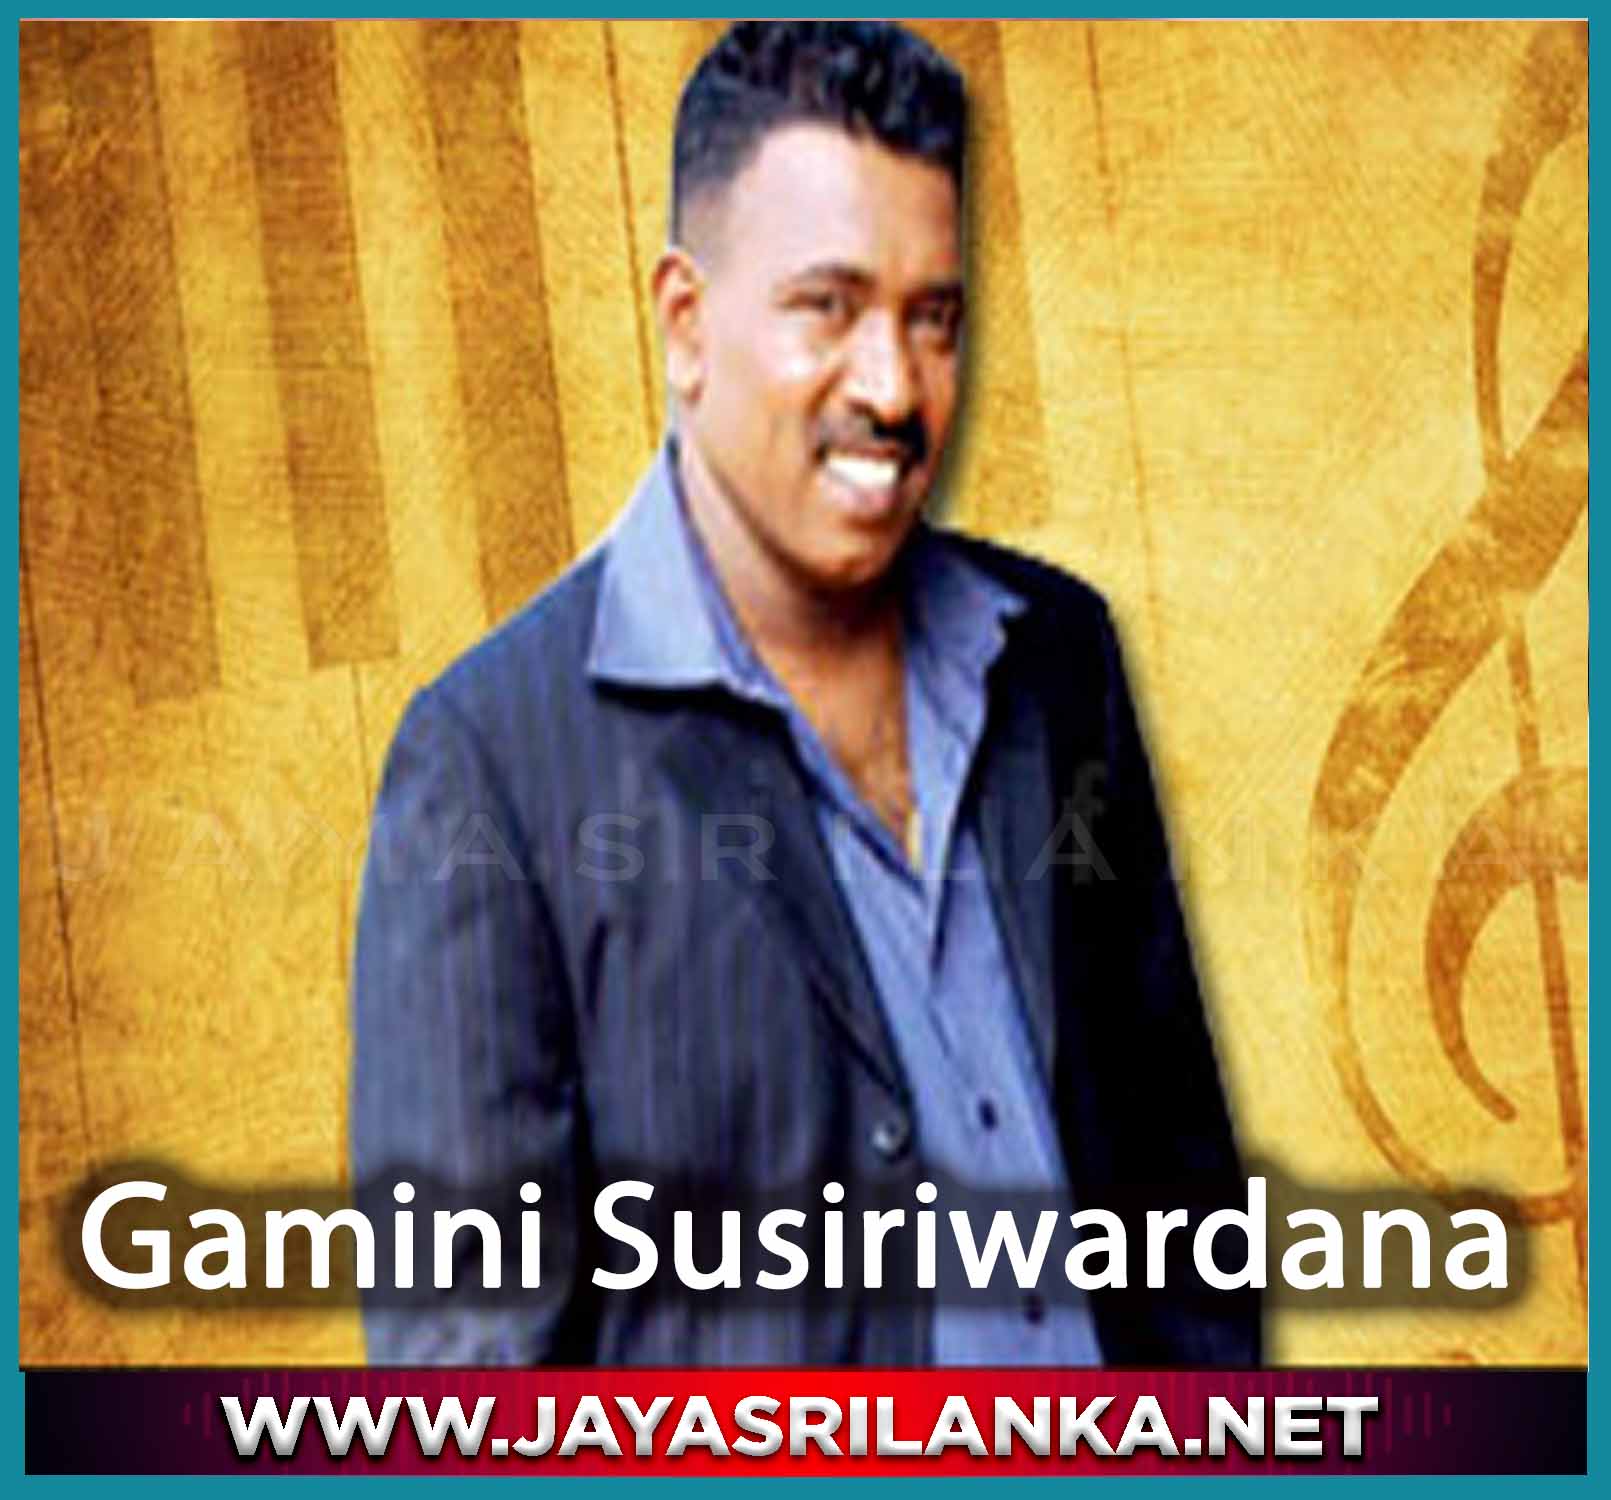 Dannawada Man Dukin - Gamini Susiriwardana mp3 Image